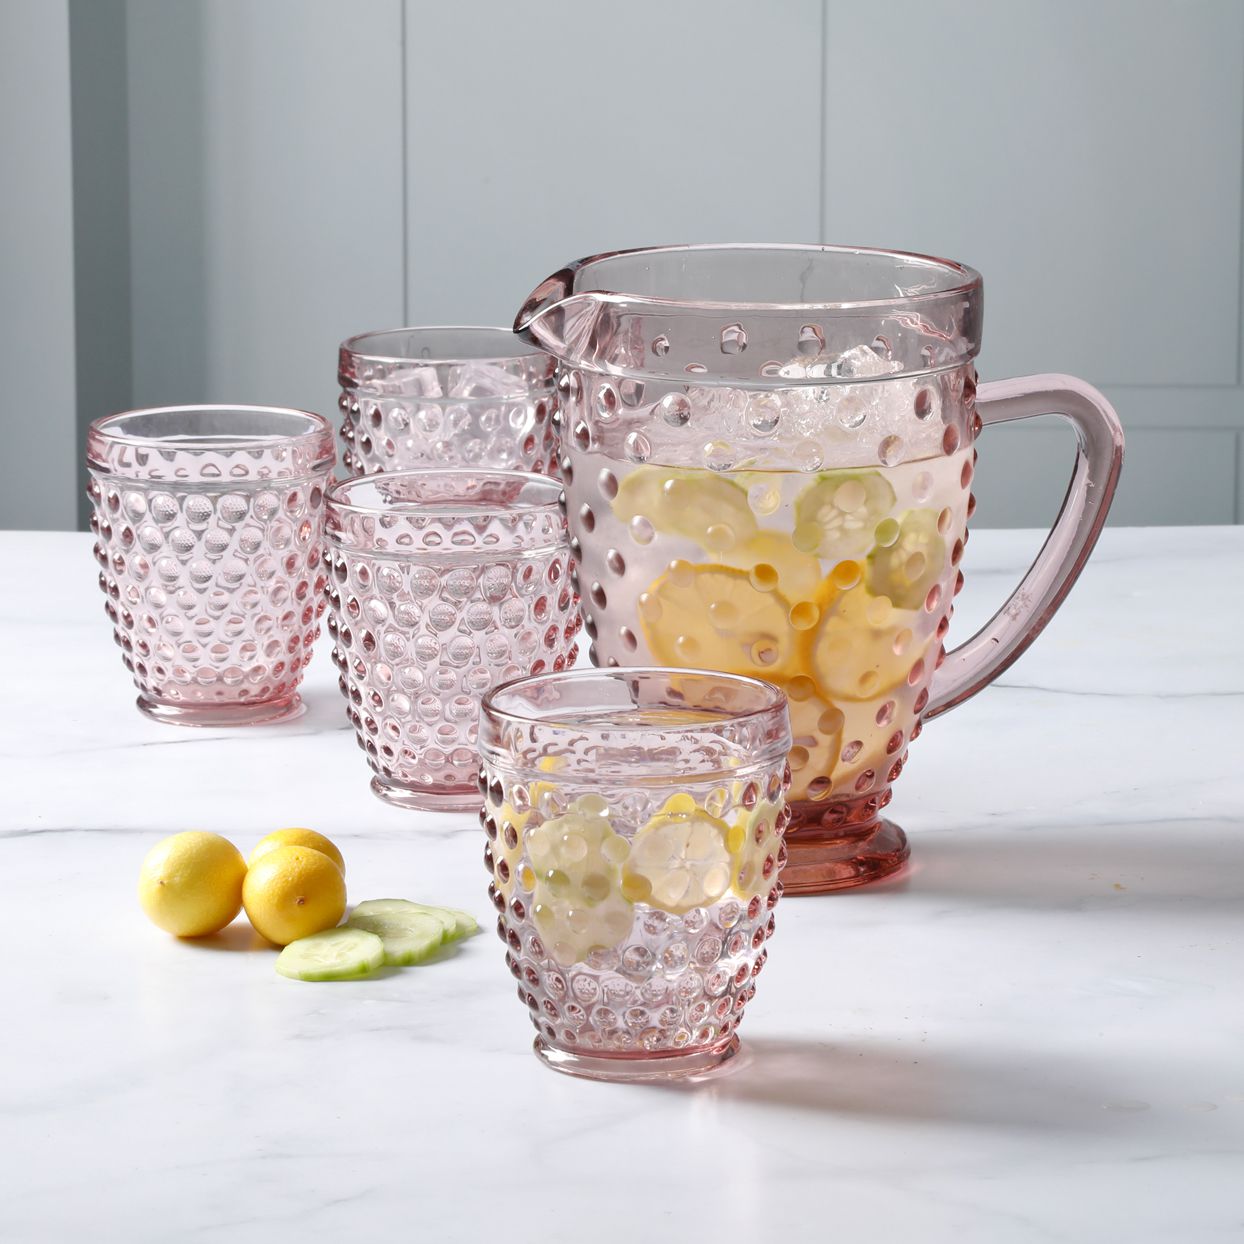 martha stewart 5-piece hobnail glass pitcher set